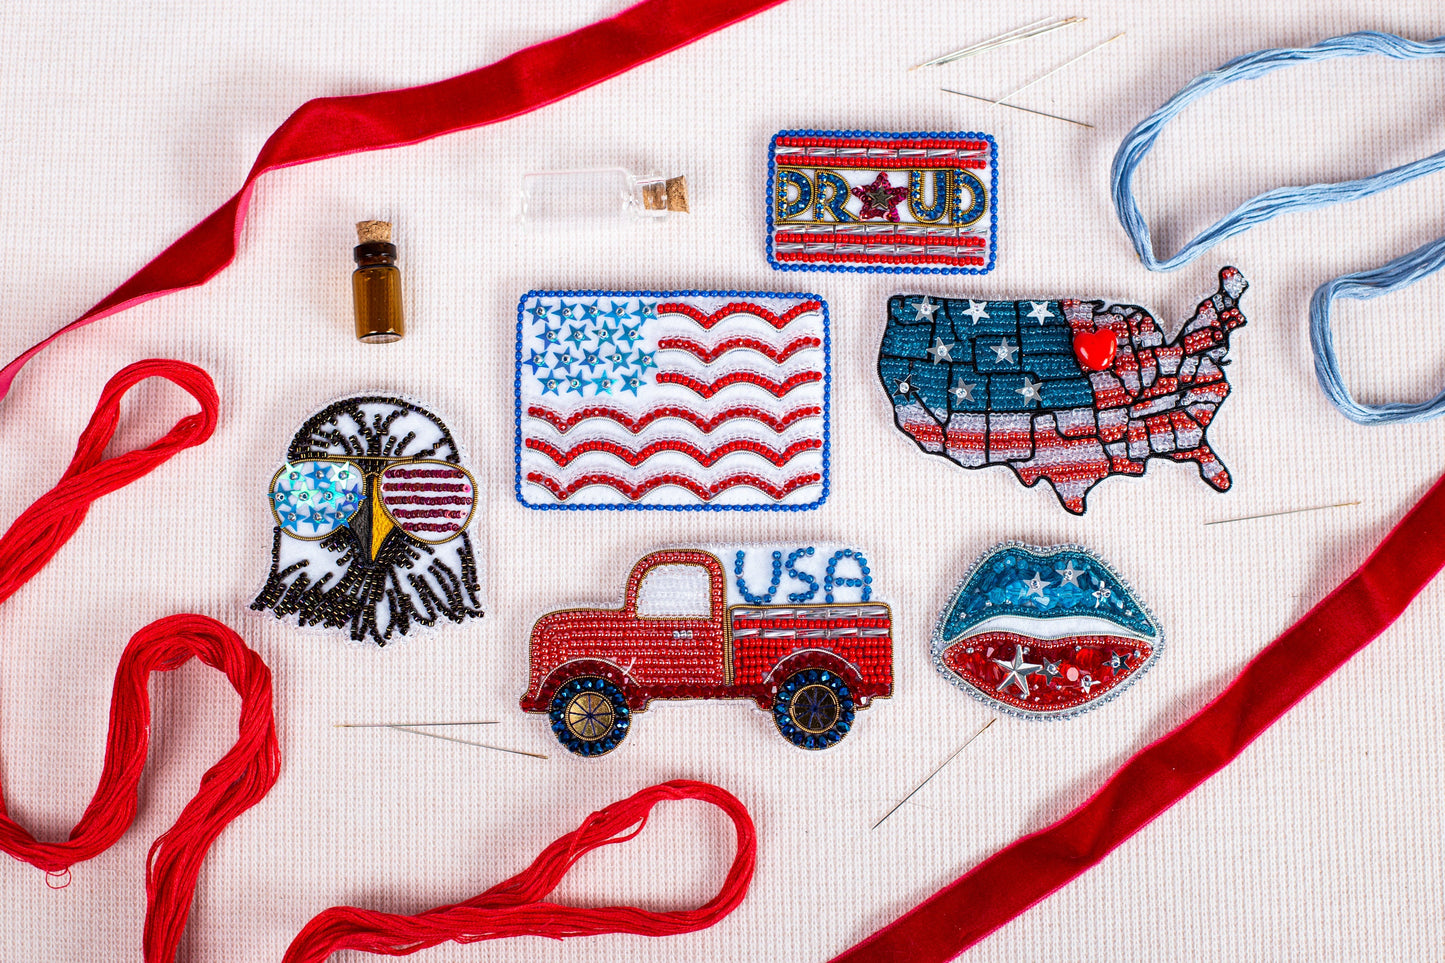 American Flag Bead Embroidery Kit. Seed Bead Brooch kit. DIY Craft kit. Beadweaving Kit. Needlework beading. Handmade Jewelry Making Kit